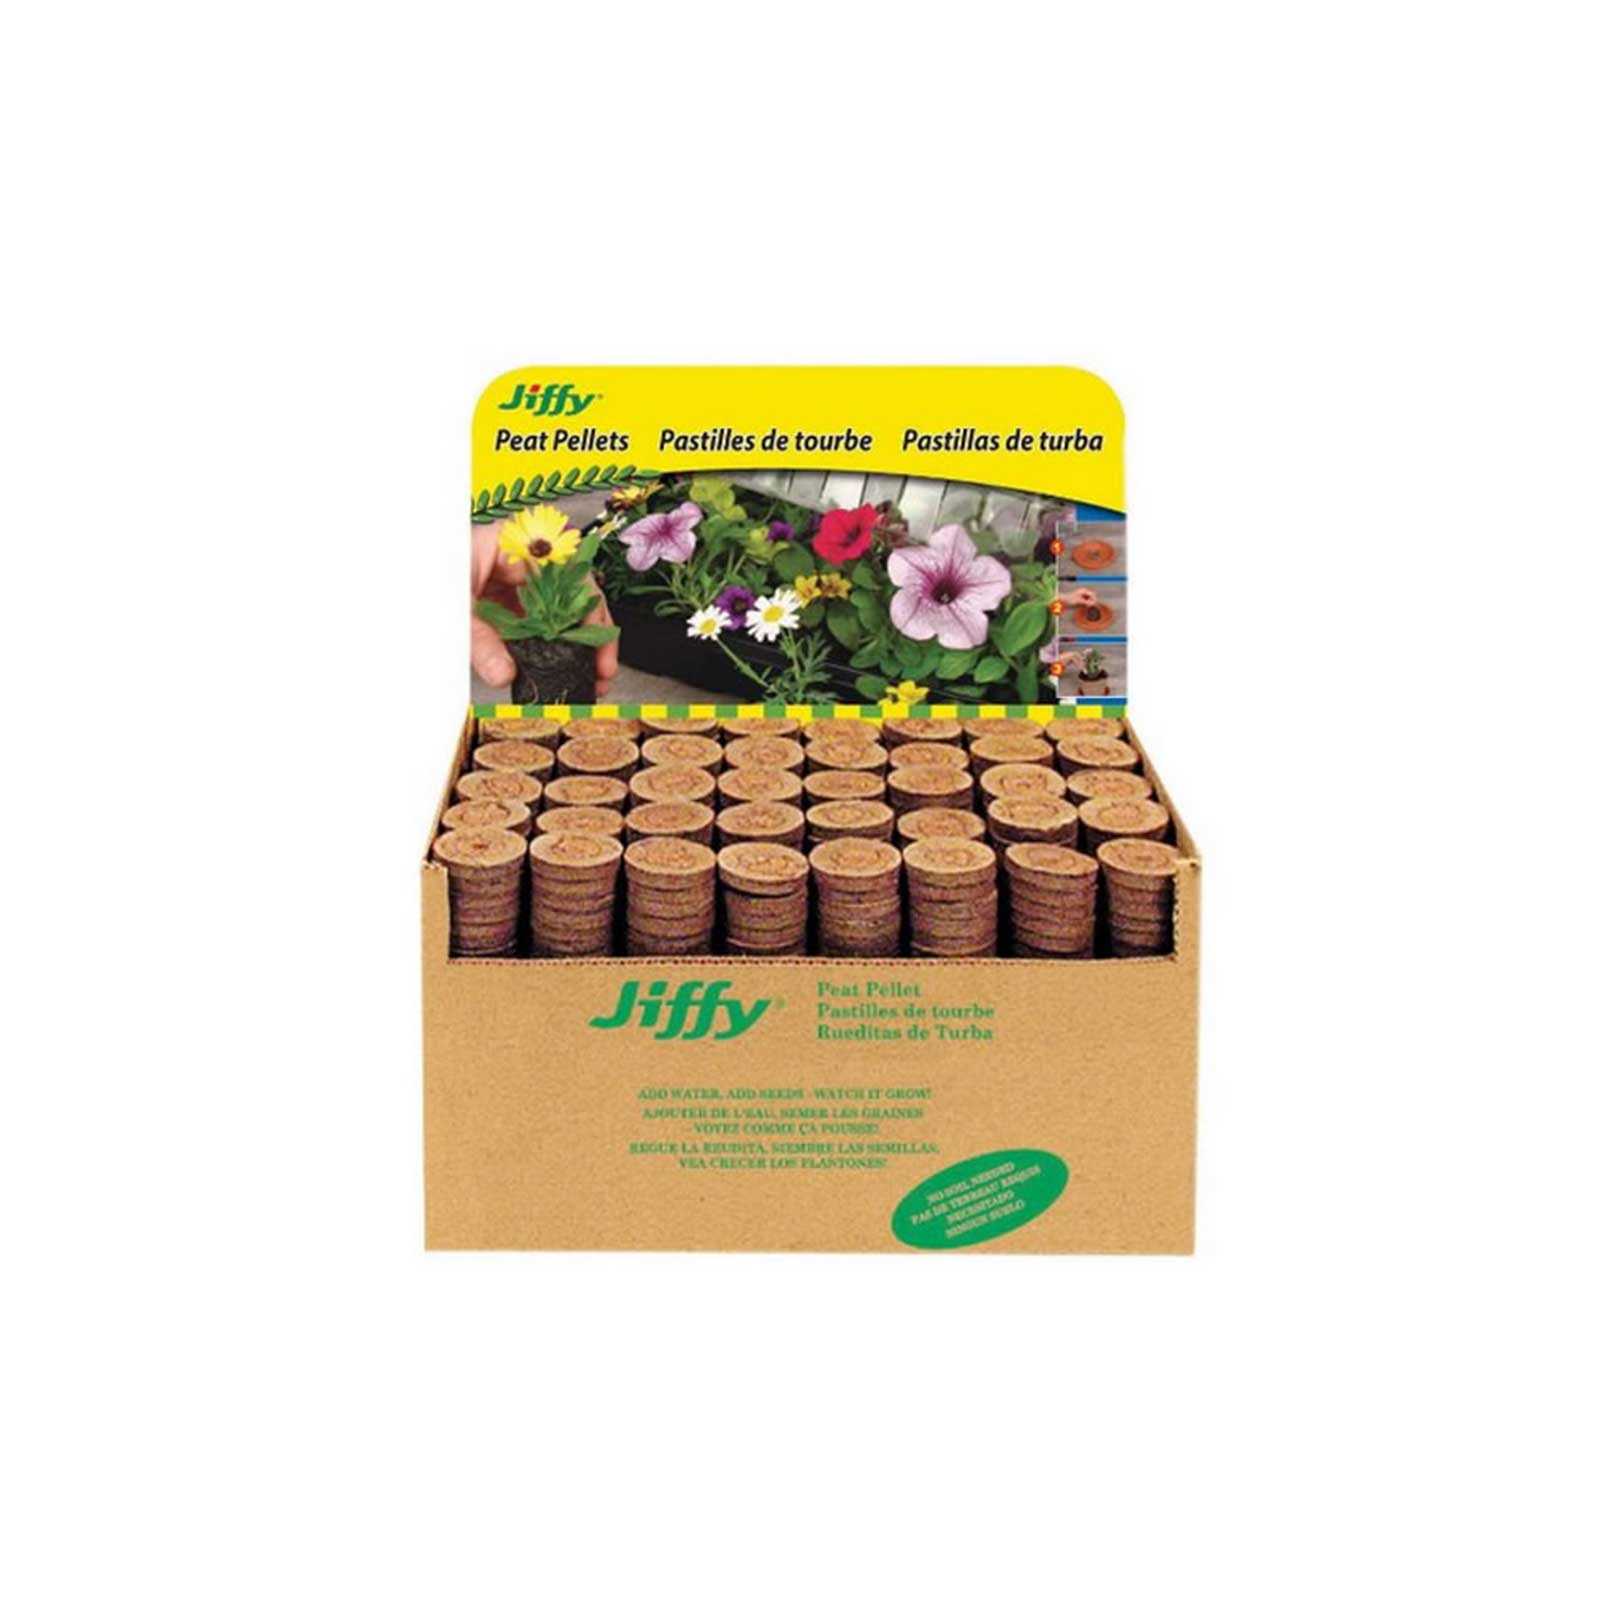 7 24 mm x 43 mm en germination horticole Peat Pellet 50 Pastilles Jiffy 